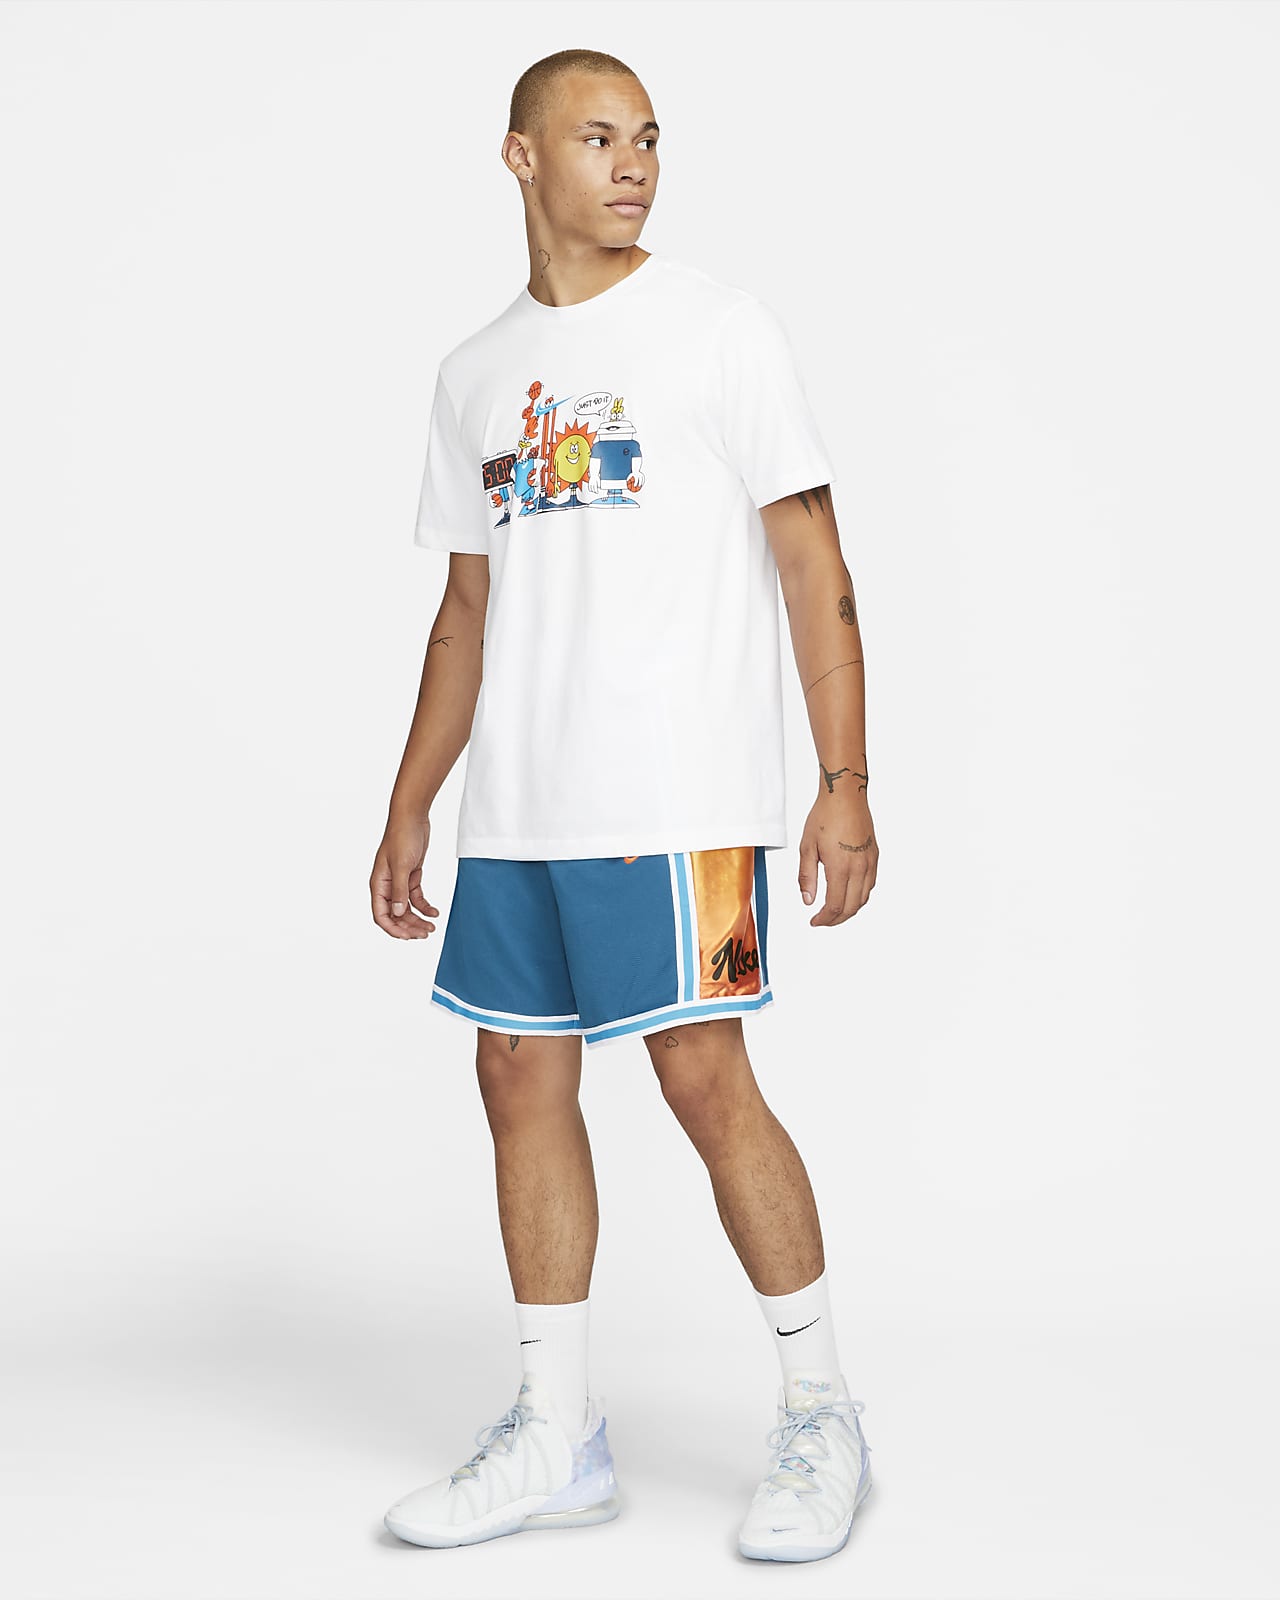 Nike Men's Dri-FIT DNA Basketball Jersey